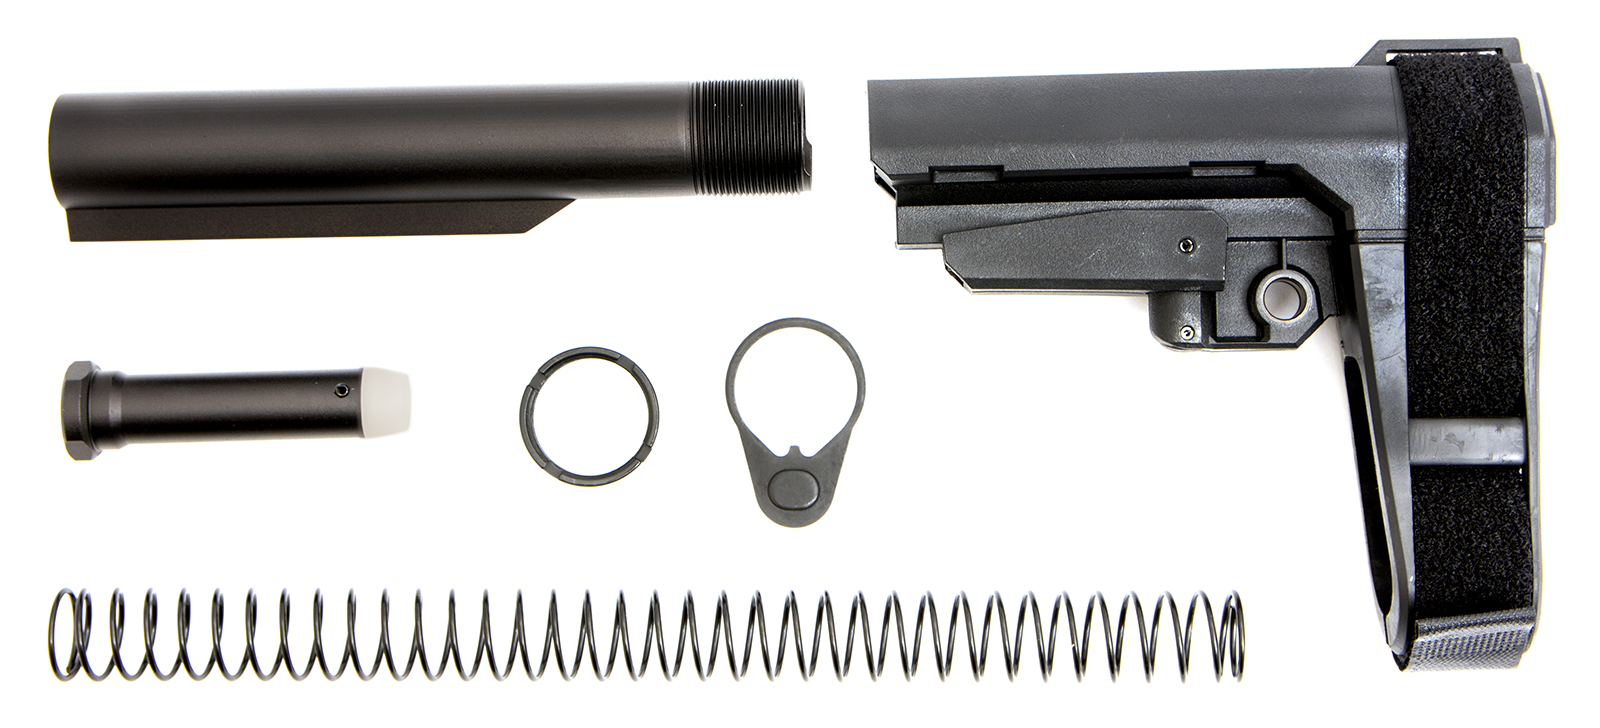 sba3-pistol-stabilizing-brace-with-buffer-tube-assembly-180616